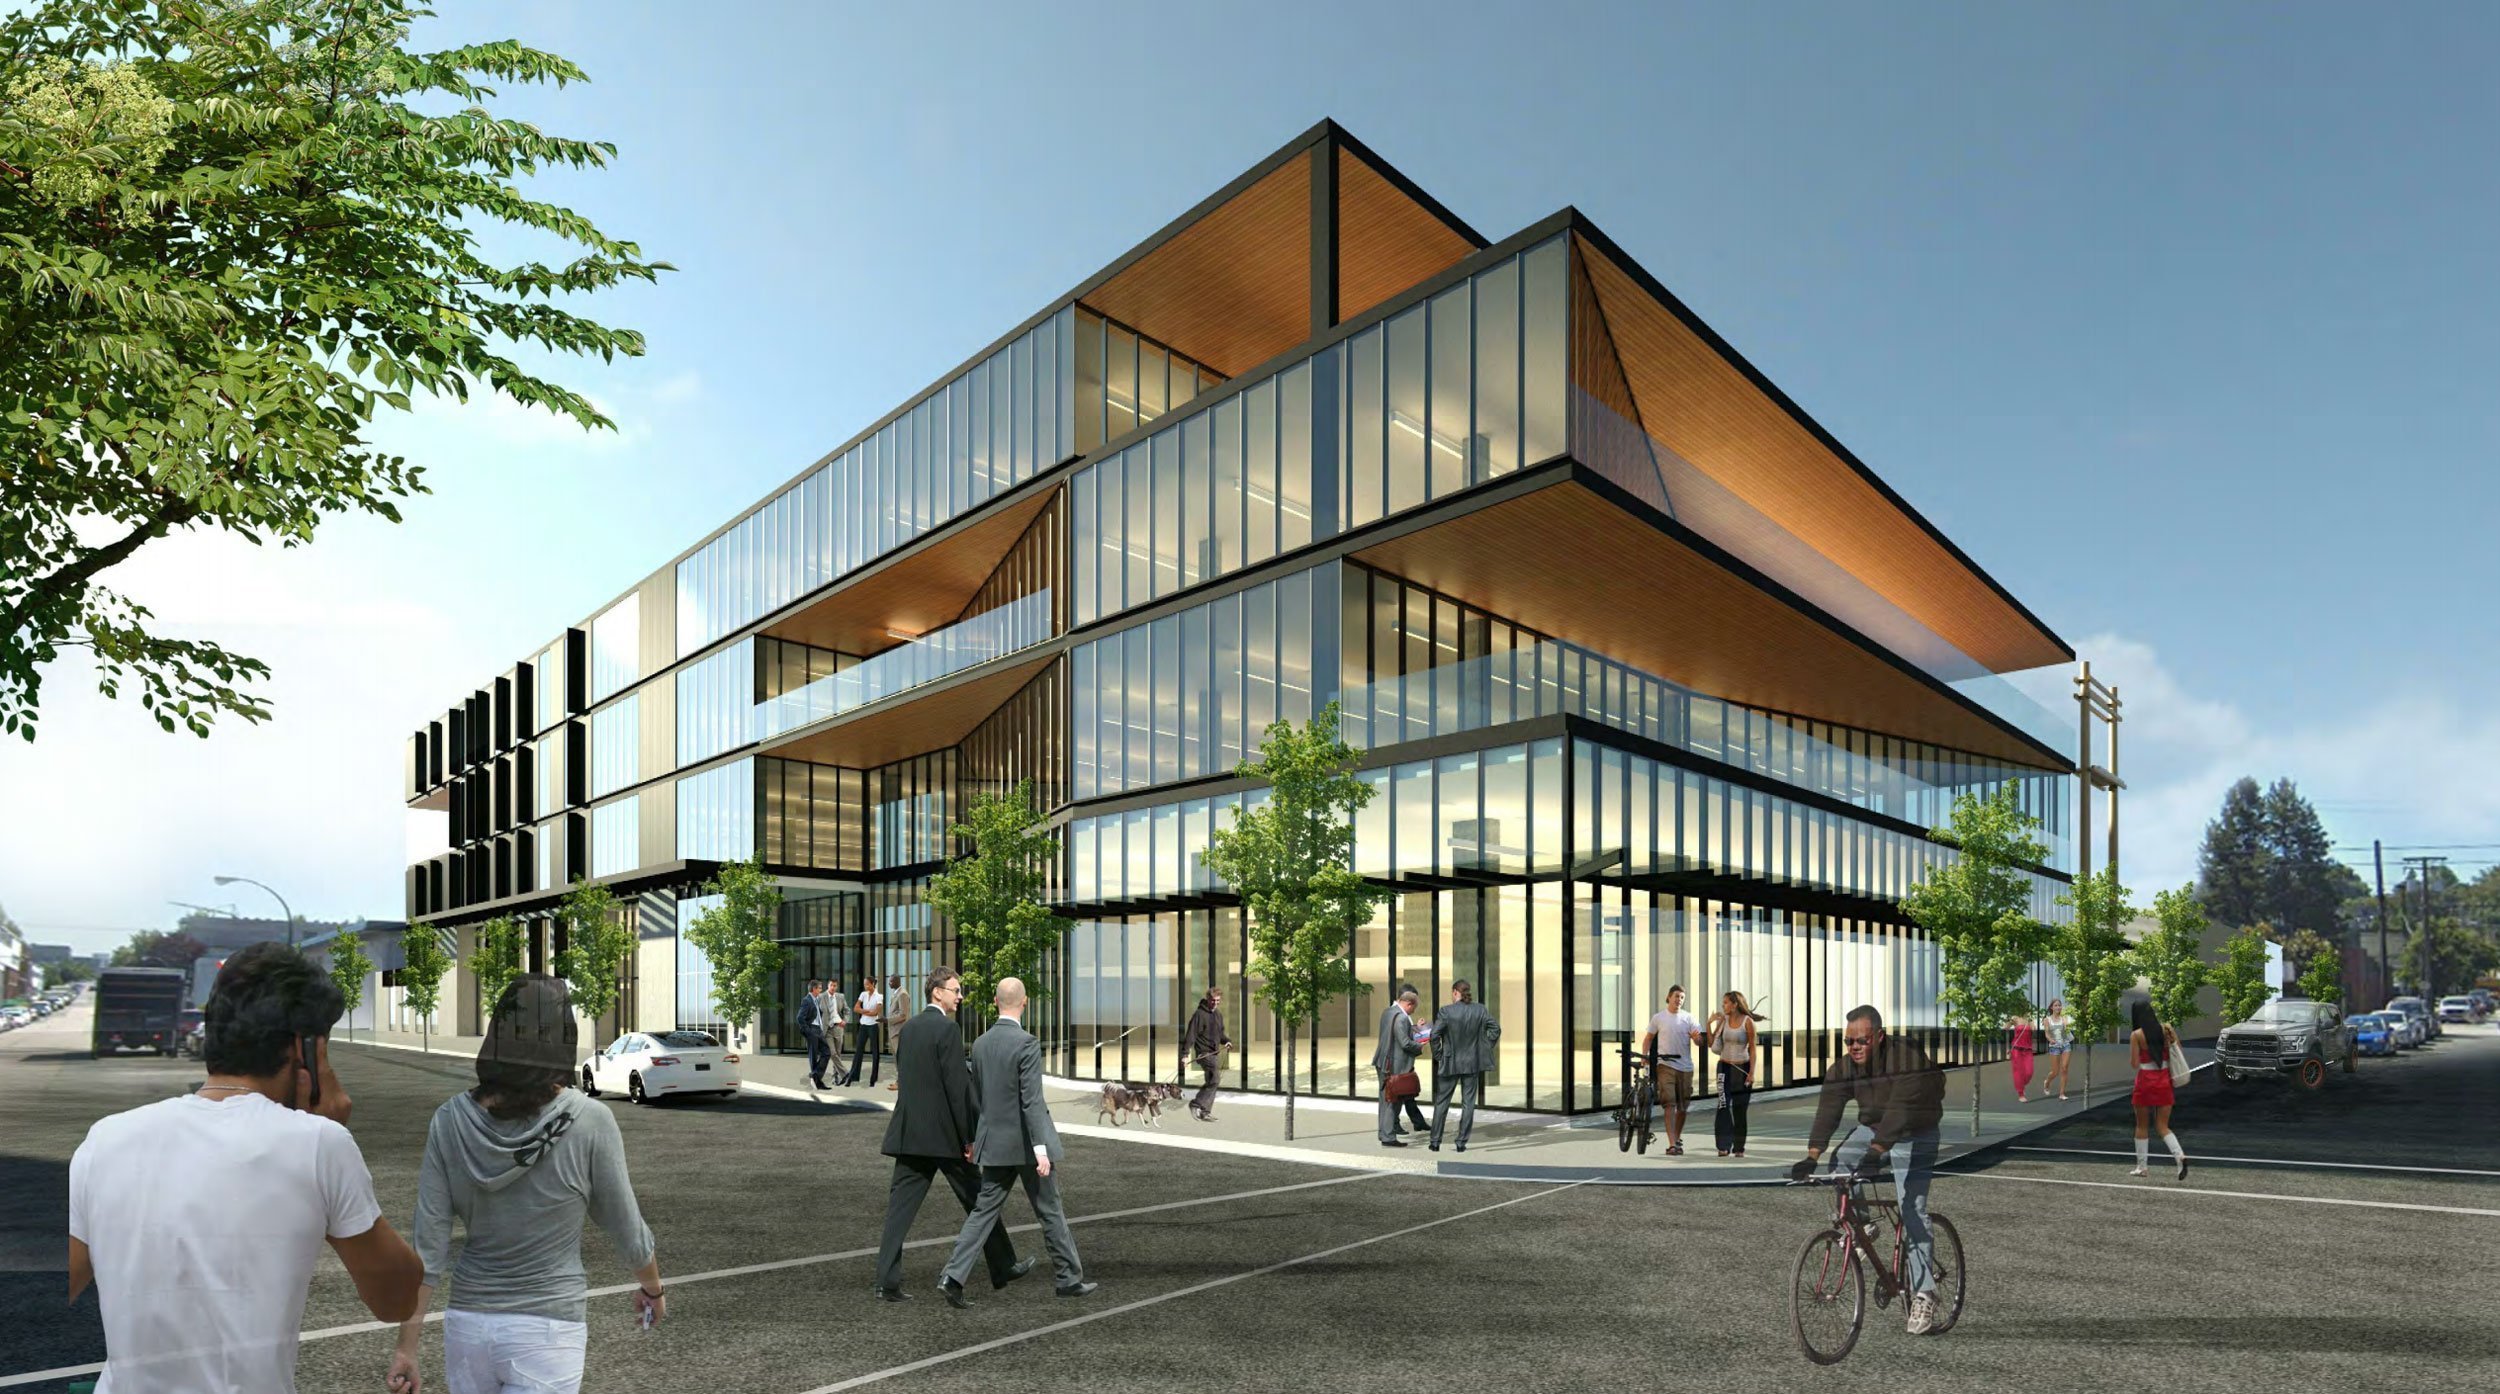 Mount Pleasant light industrial building raises bar on design - urbanYVR